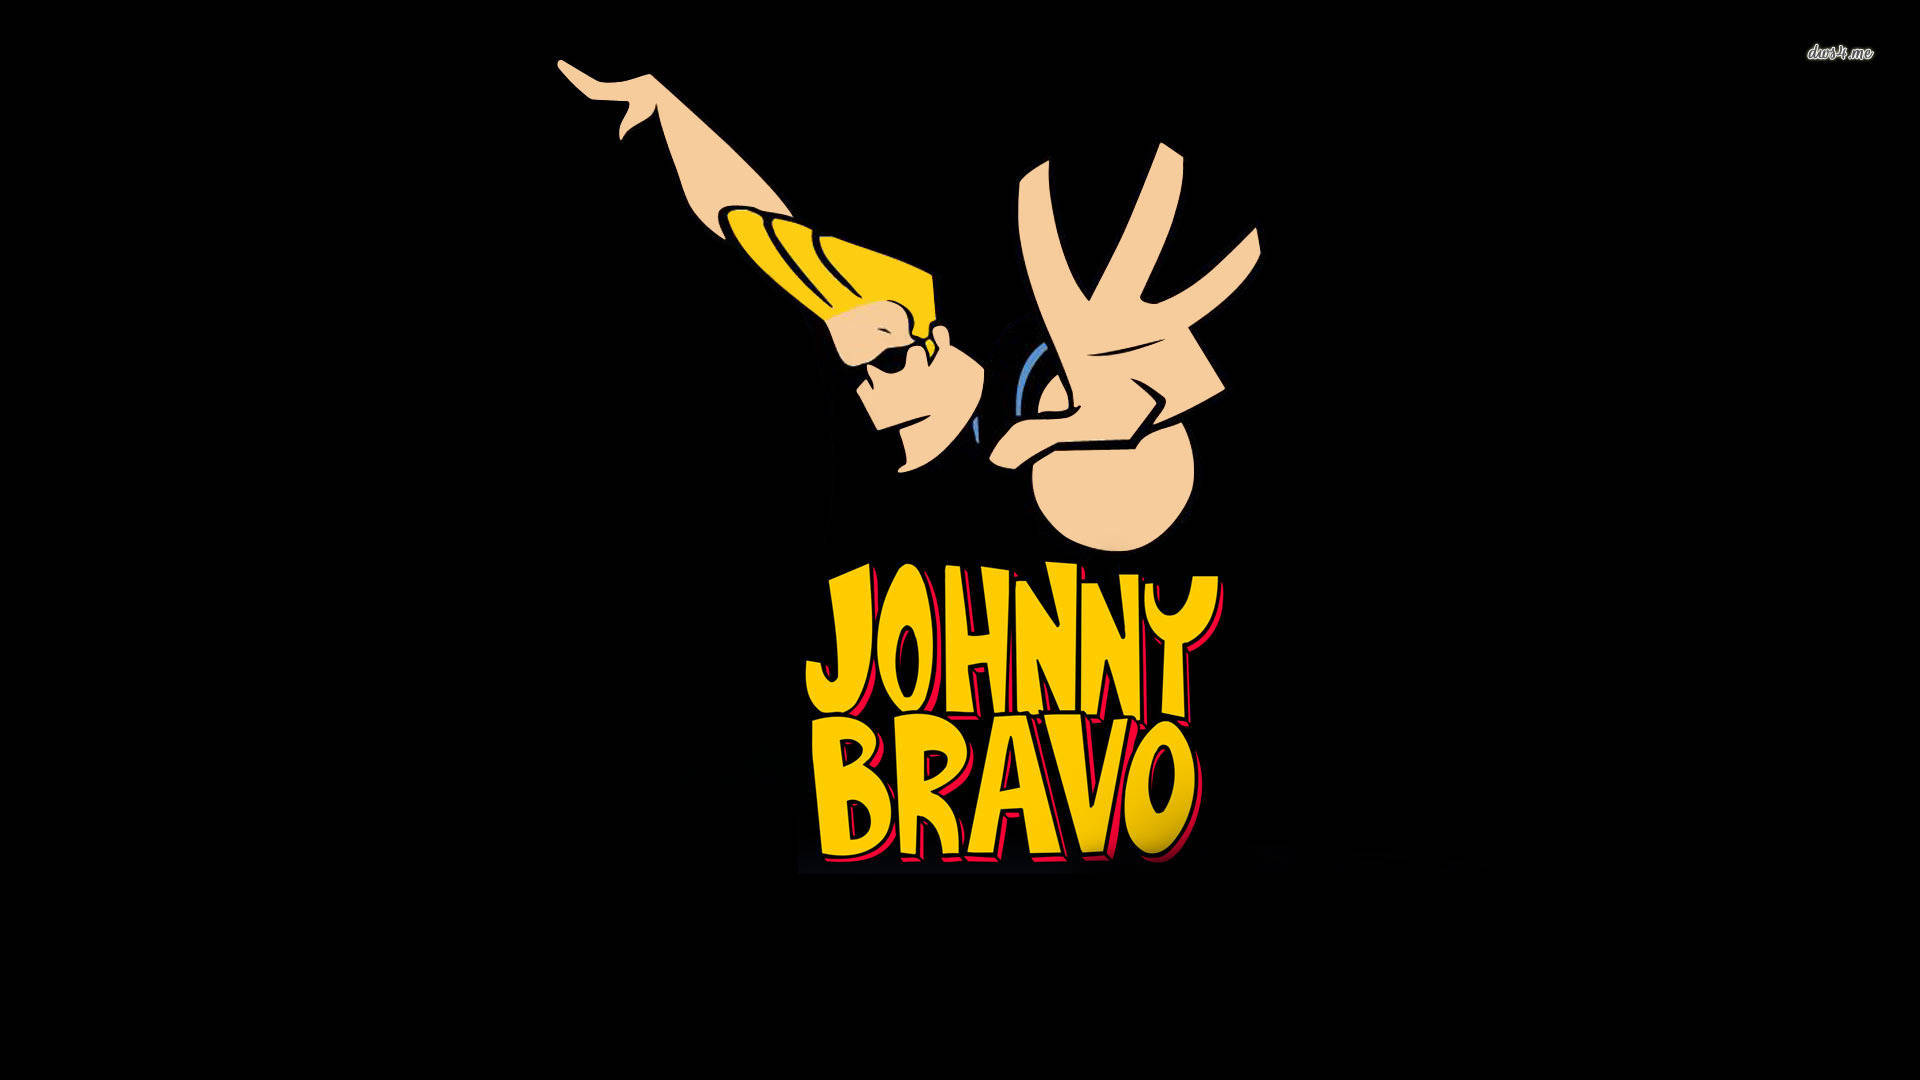 Stylish Johnny Bravo Posing With Sunglasses Background